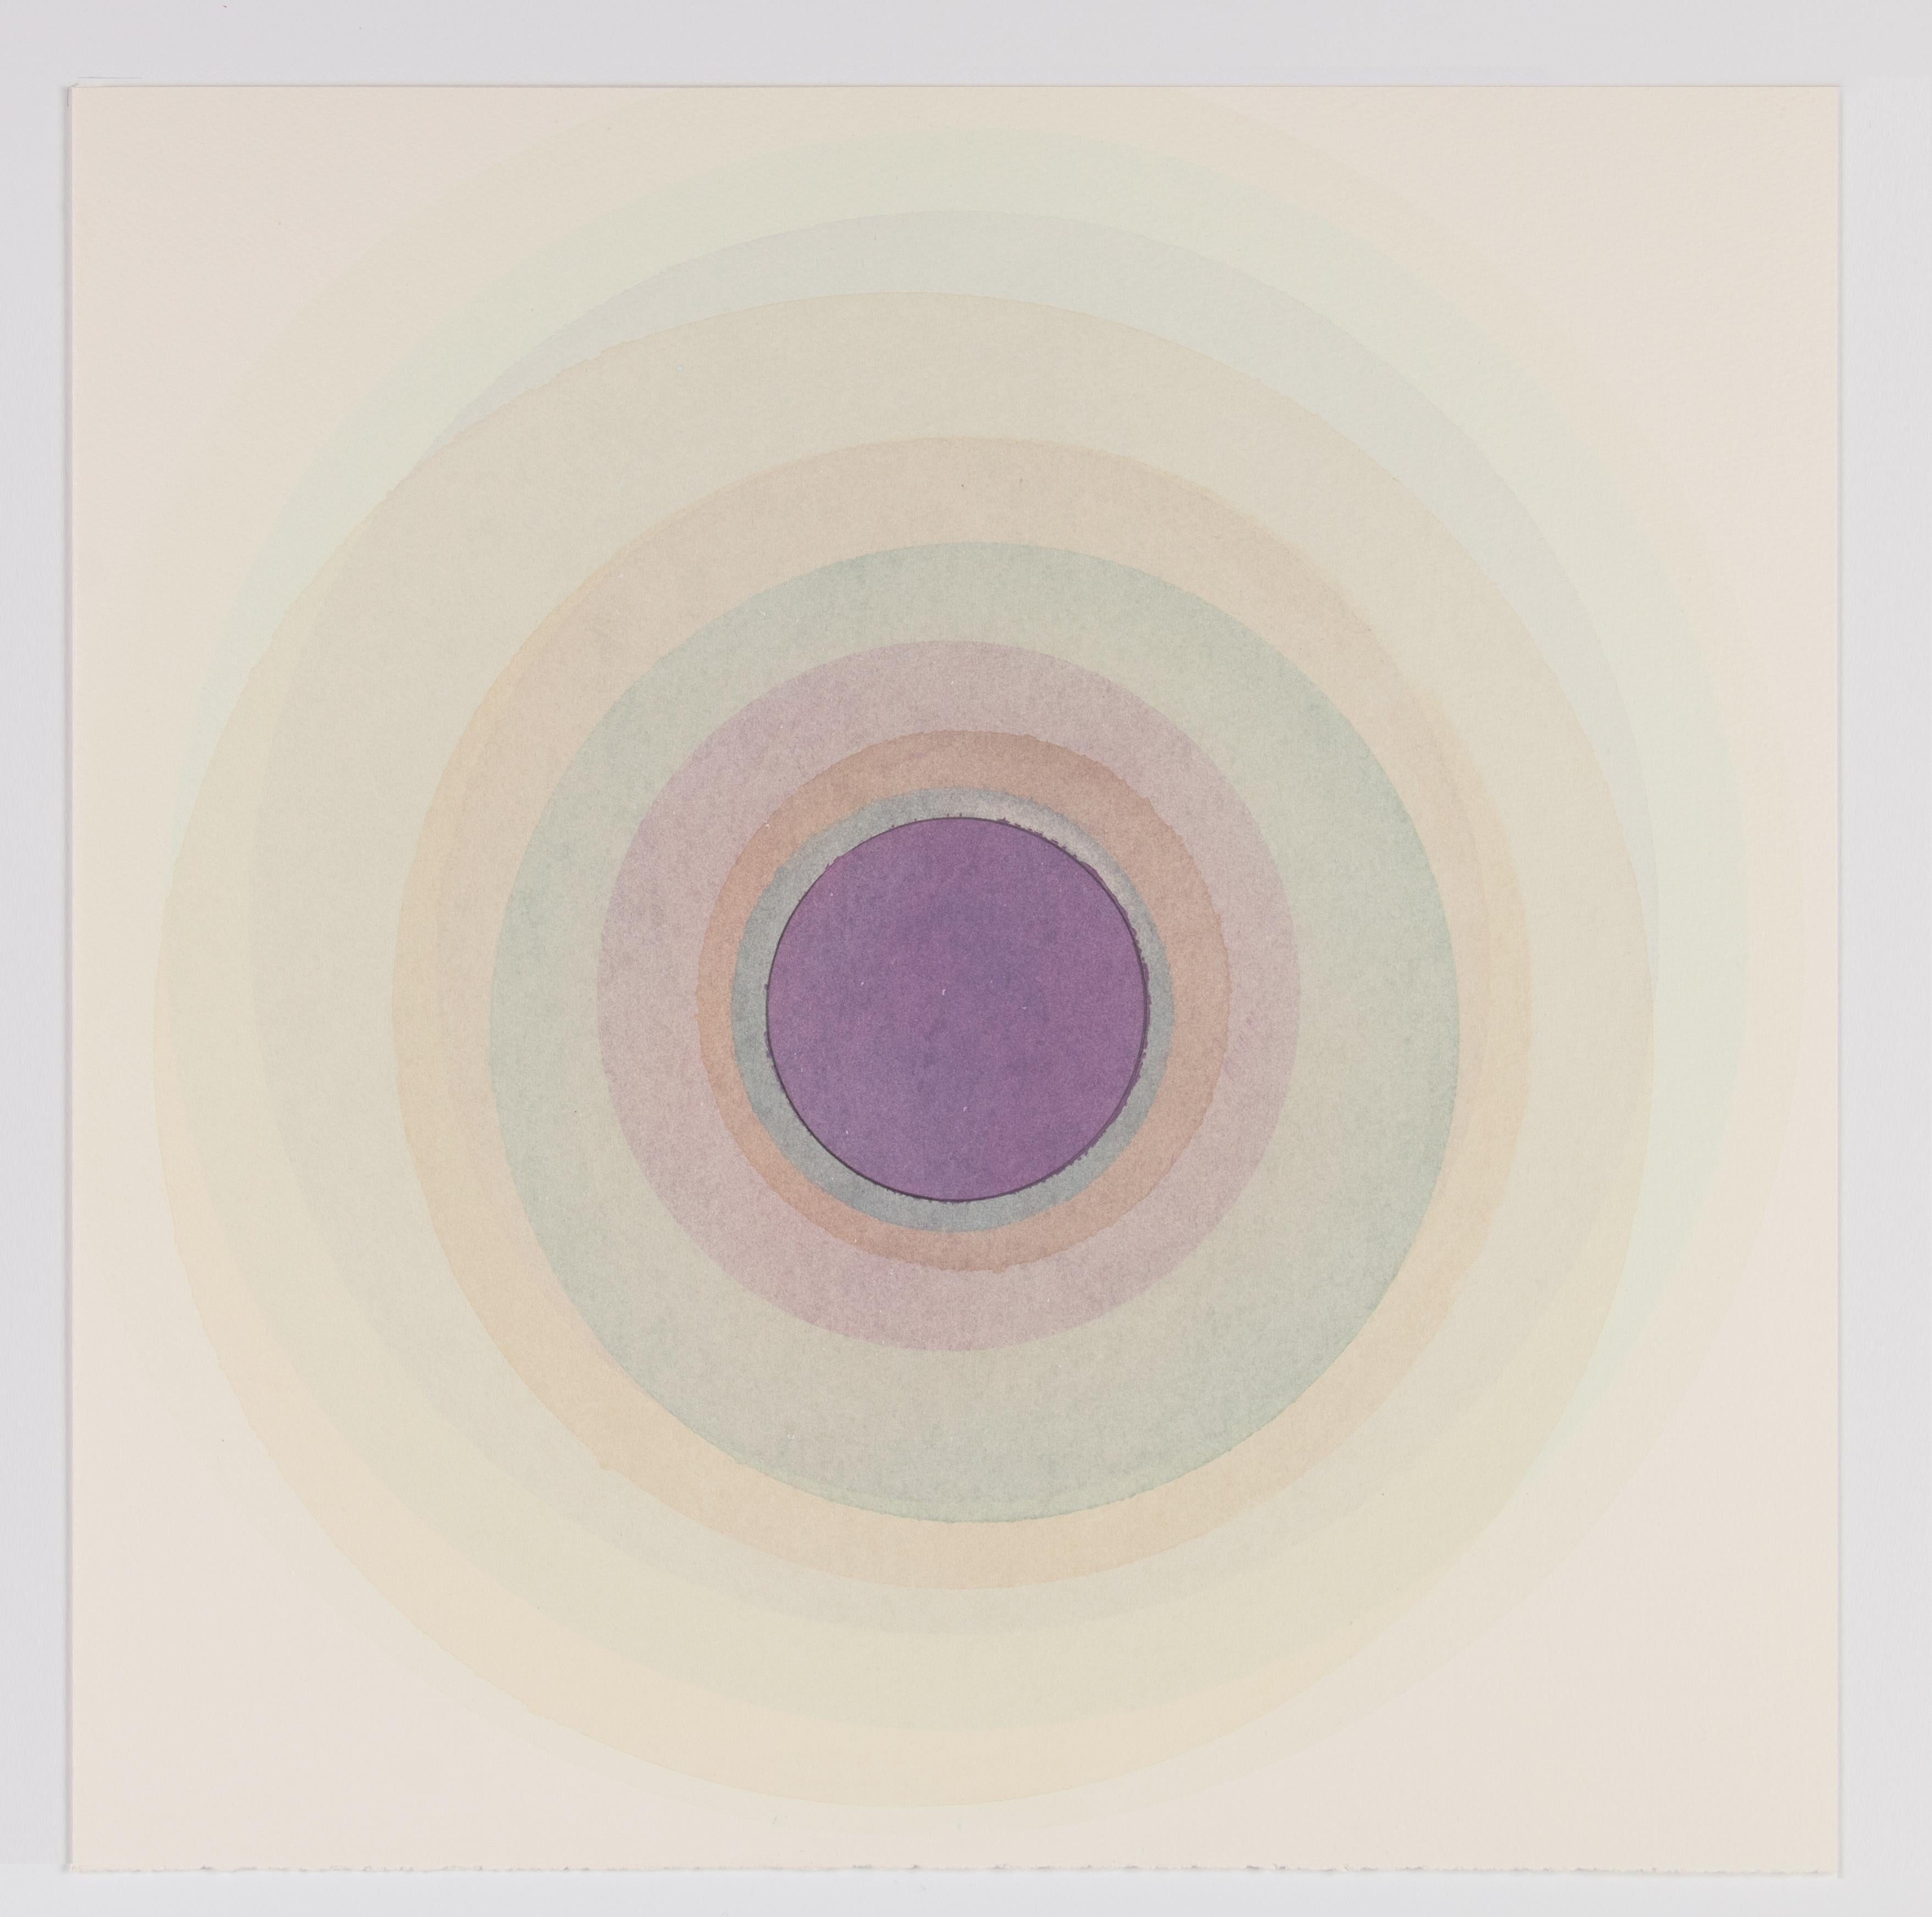 Evan Venegas Abstract Drawing – Coaxist 10419 – abstraktes geometrisches Aquarell auf Papier in weichem Pastellfarben